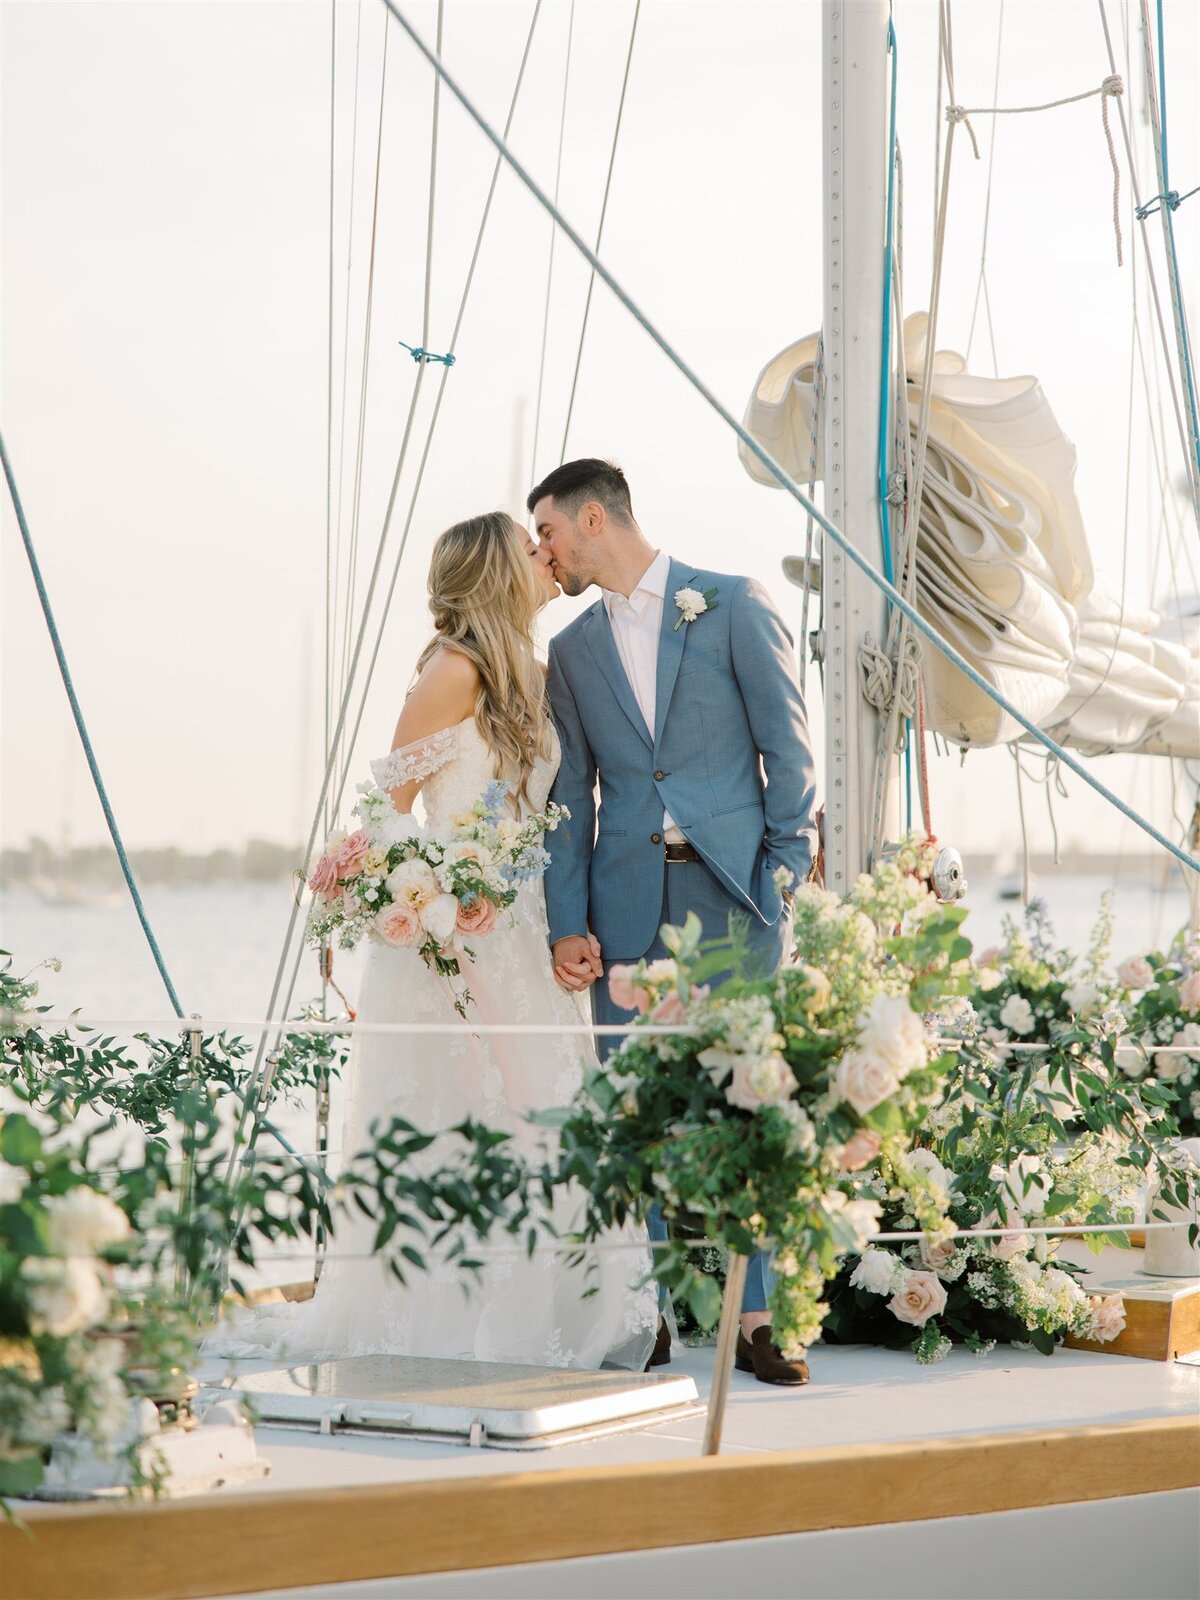 Kate-Murtaugh-Events-wedding-planner-Newport-sailboat-elopement-bride-groom-greenery